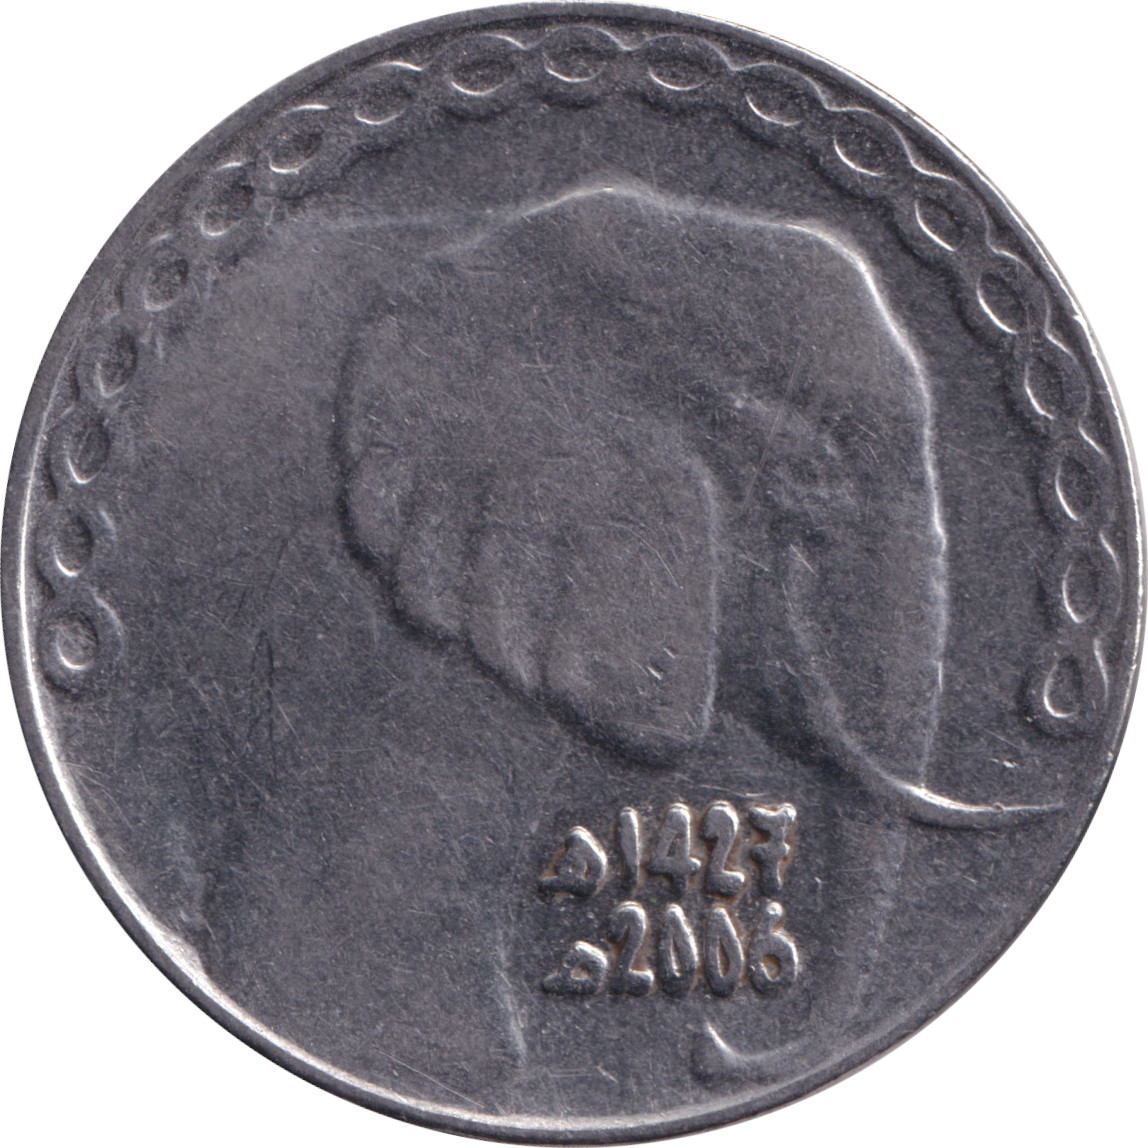 5 dinars - Elephant